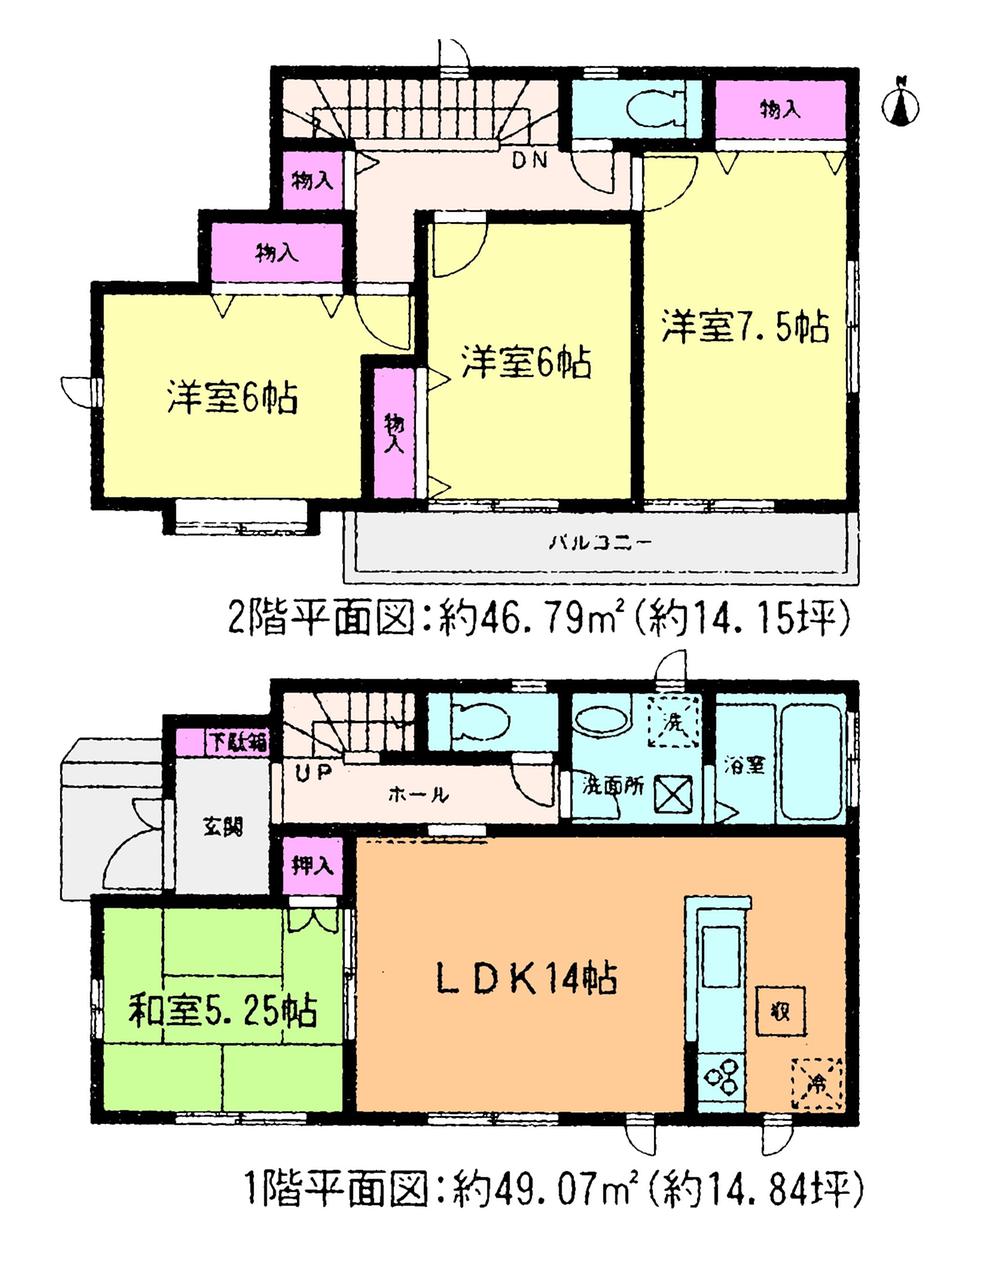 Floor plan. (1 Building), Price 26,900,000 yen, 4LDK, Land area 98.35 sq m , Building area 95.86 sq m